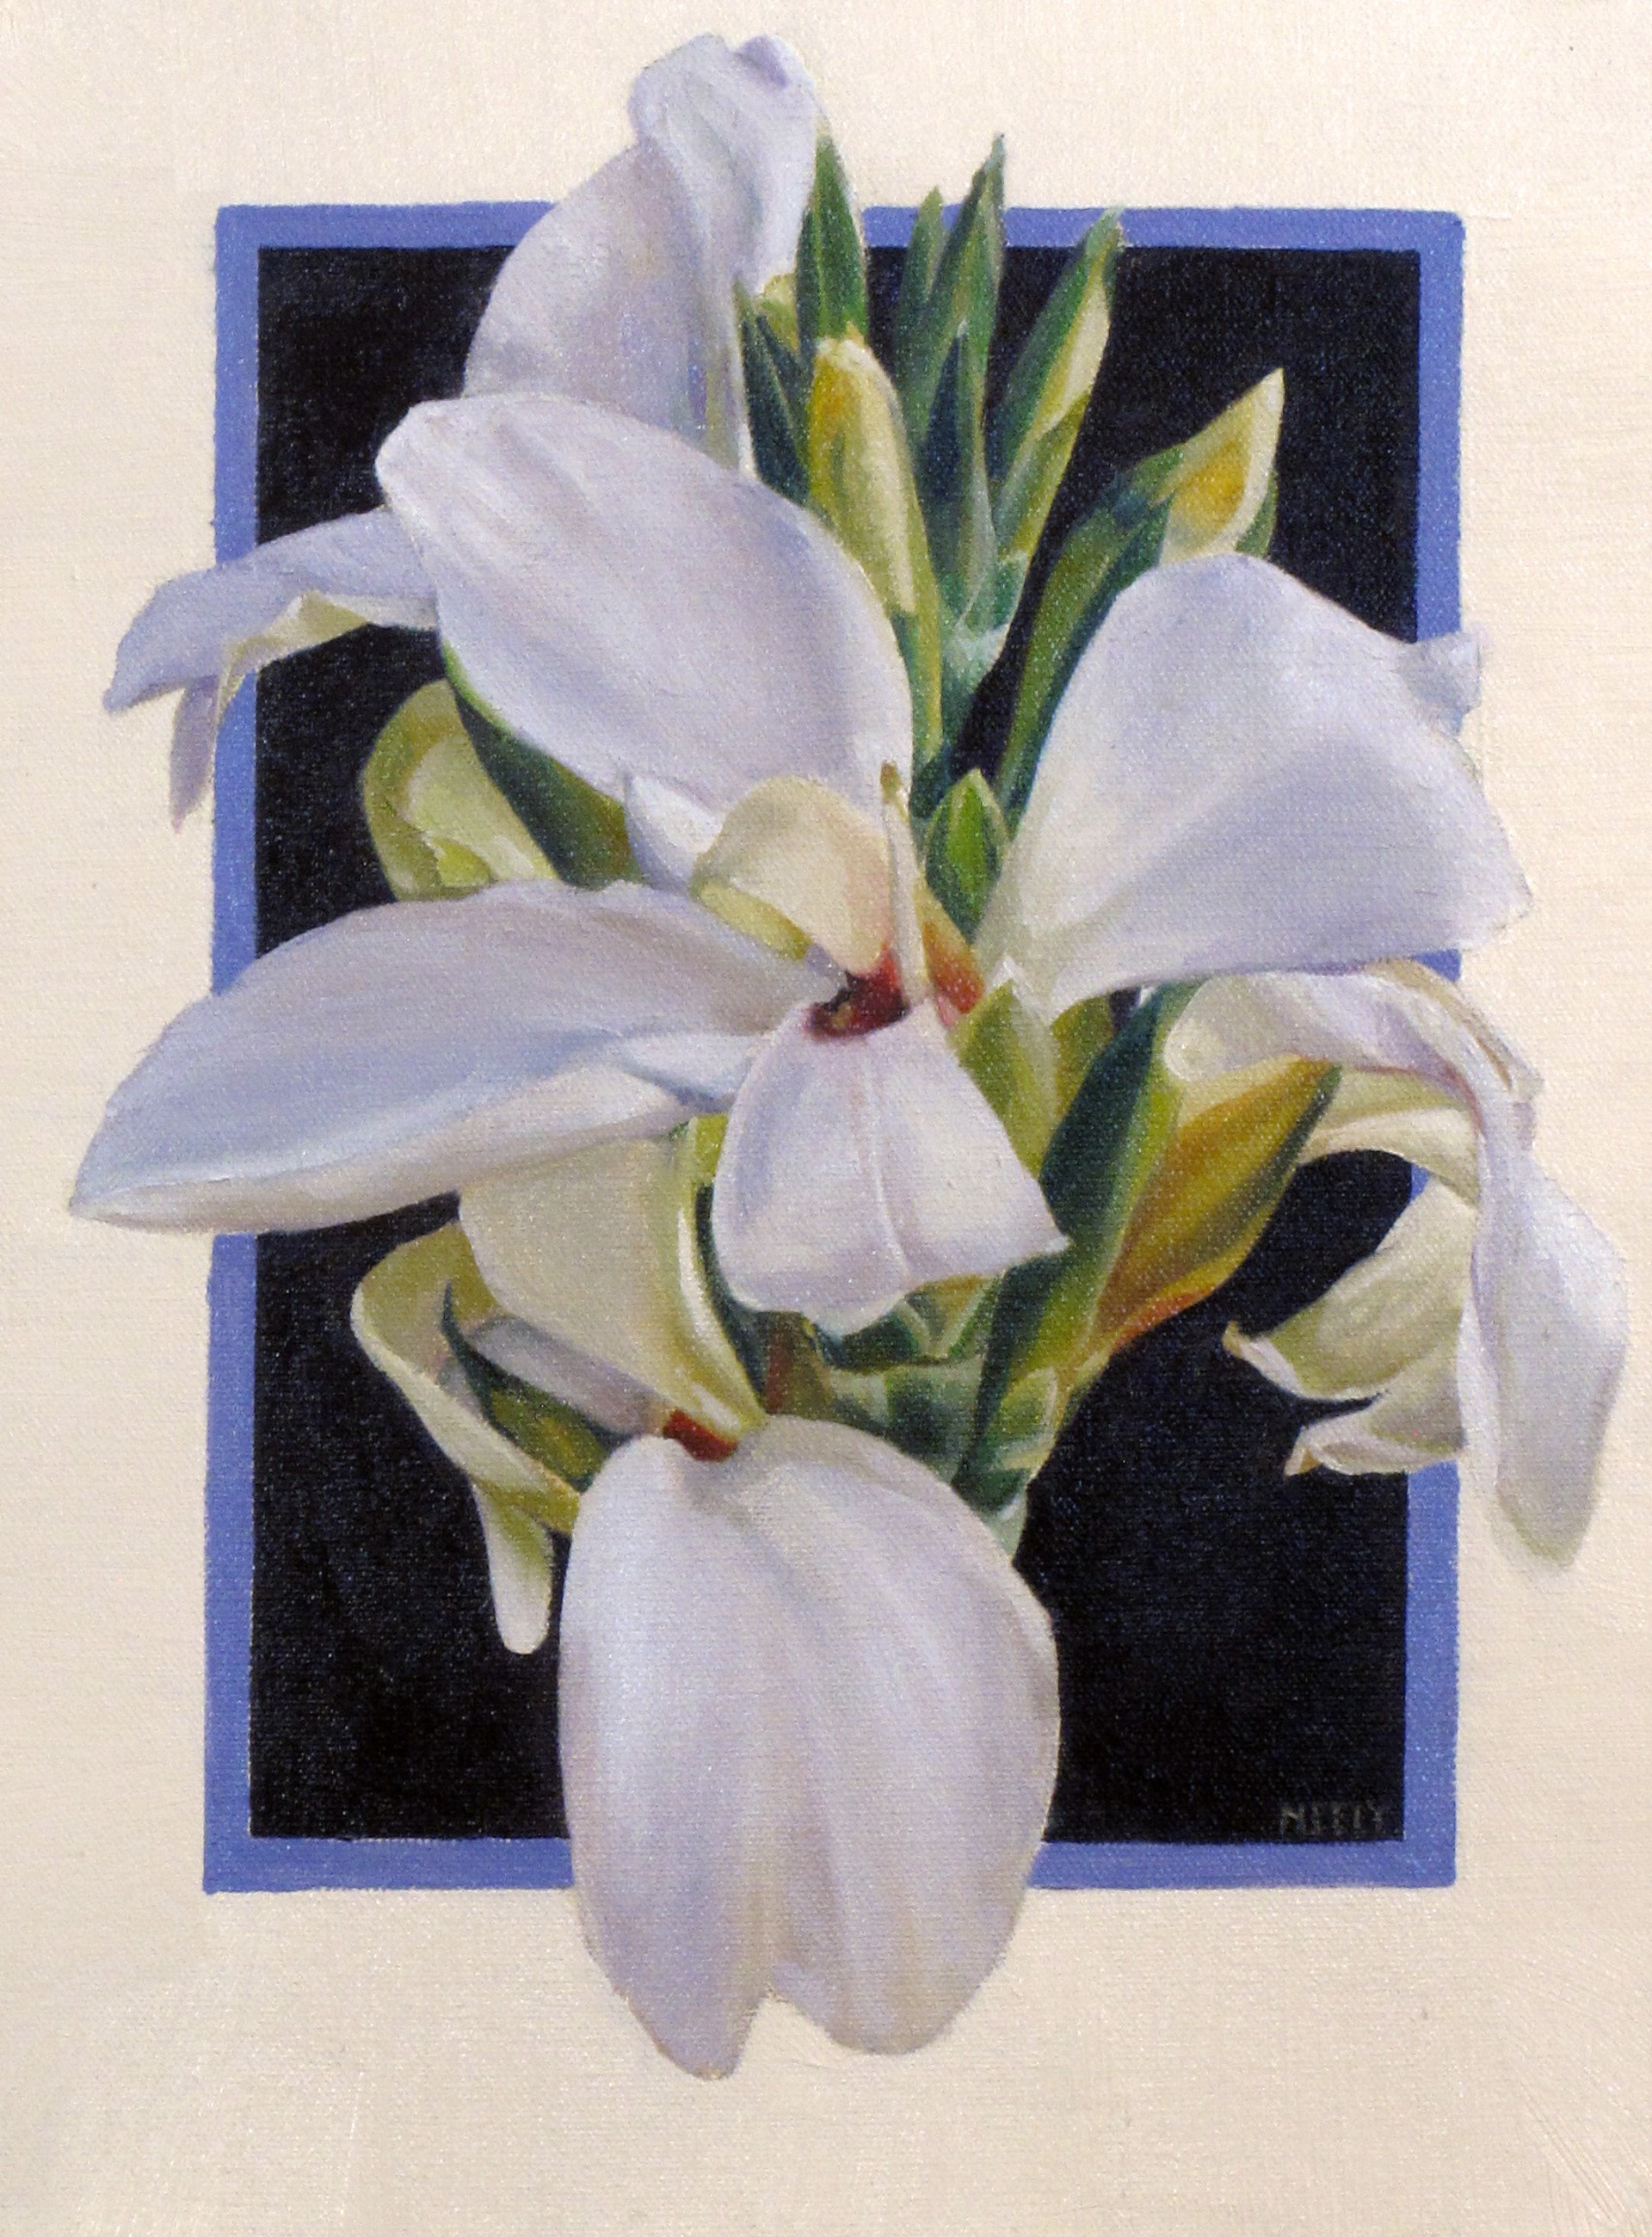 White Canna Lily by Stephanie Neely